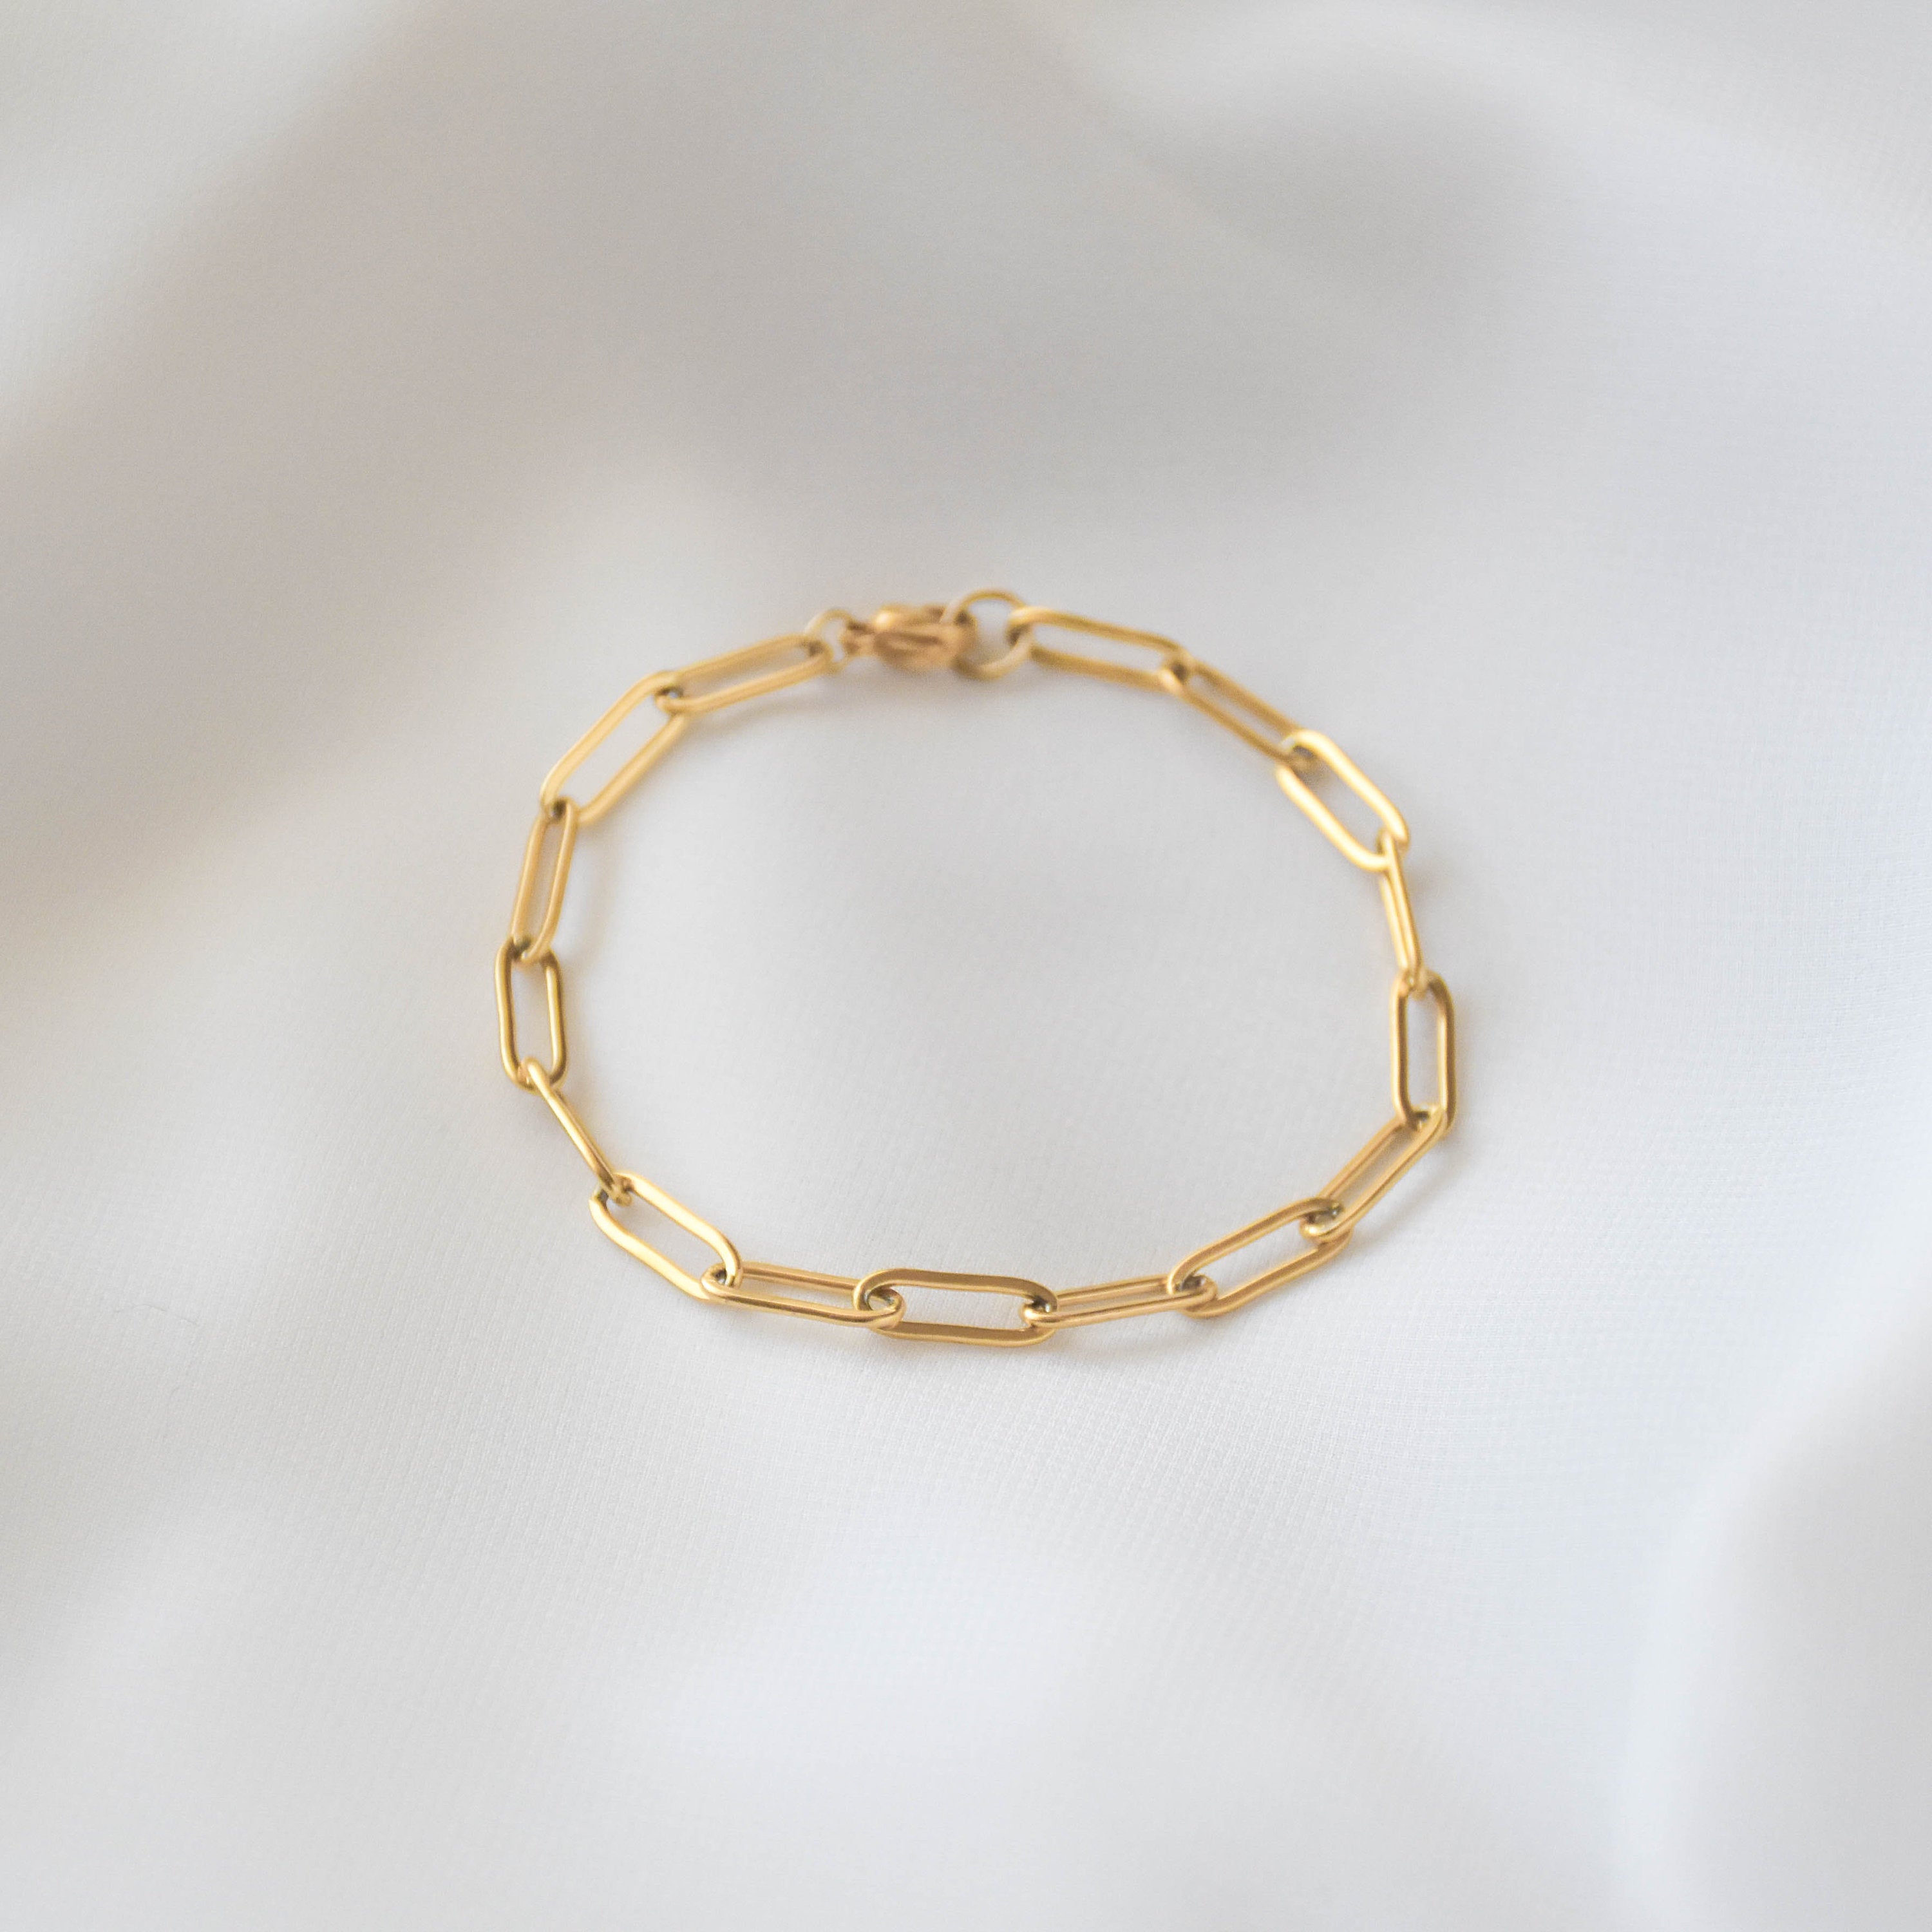 Paperclip Bracelet - link chain bracelet, gold paperclip bracelet, gold chain bracelet, gold link bracelet, simple bracelet |GPB00004